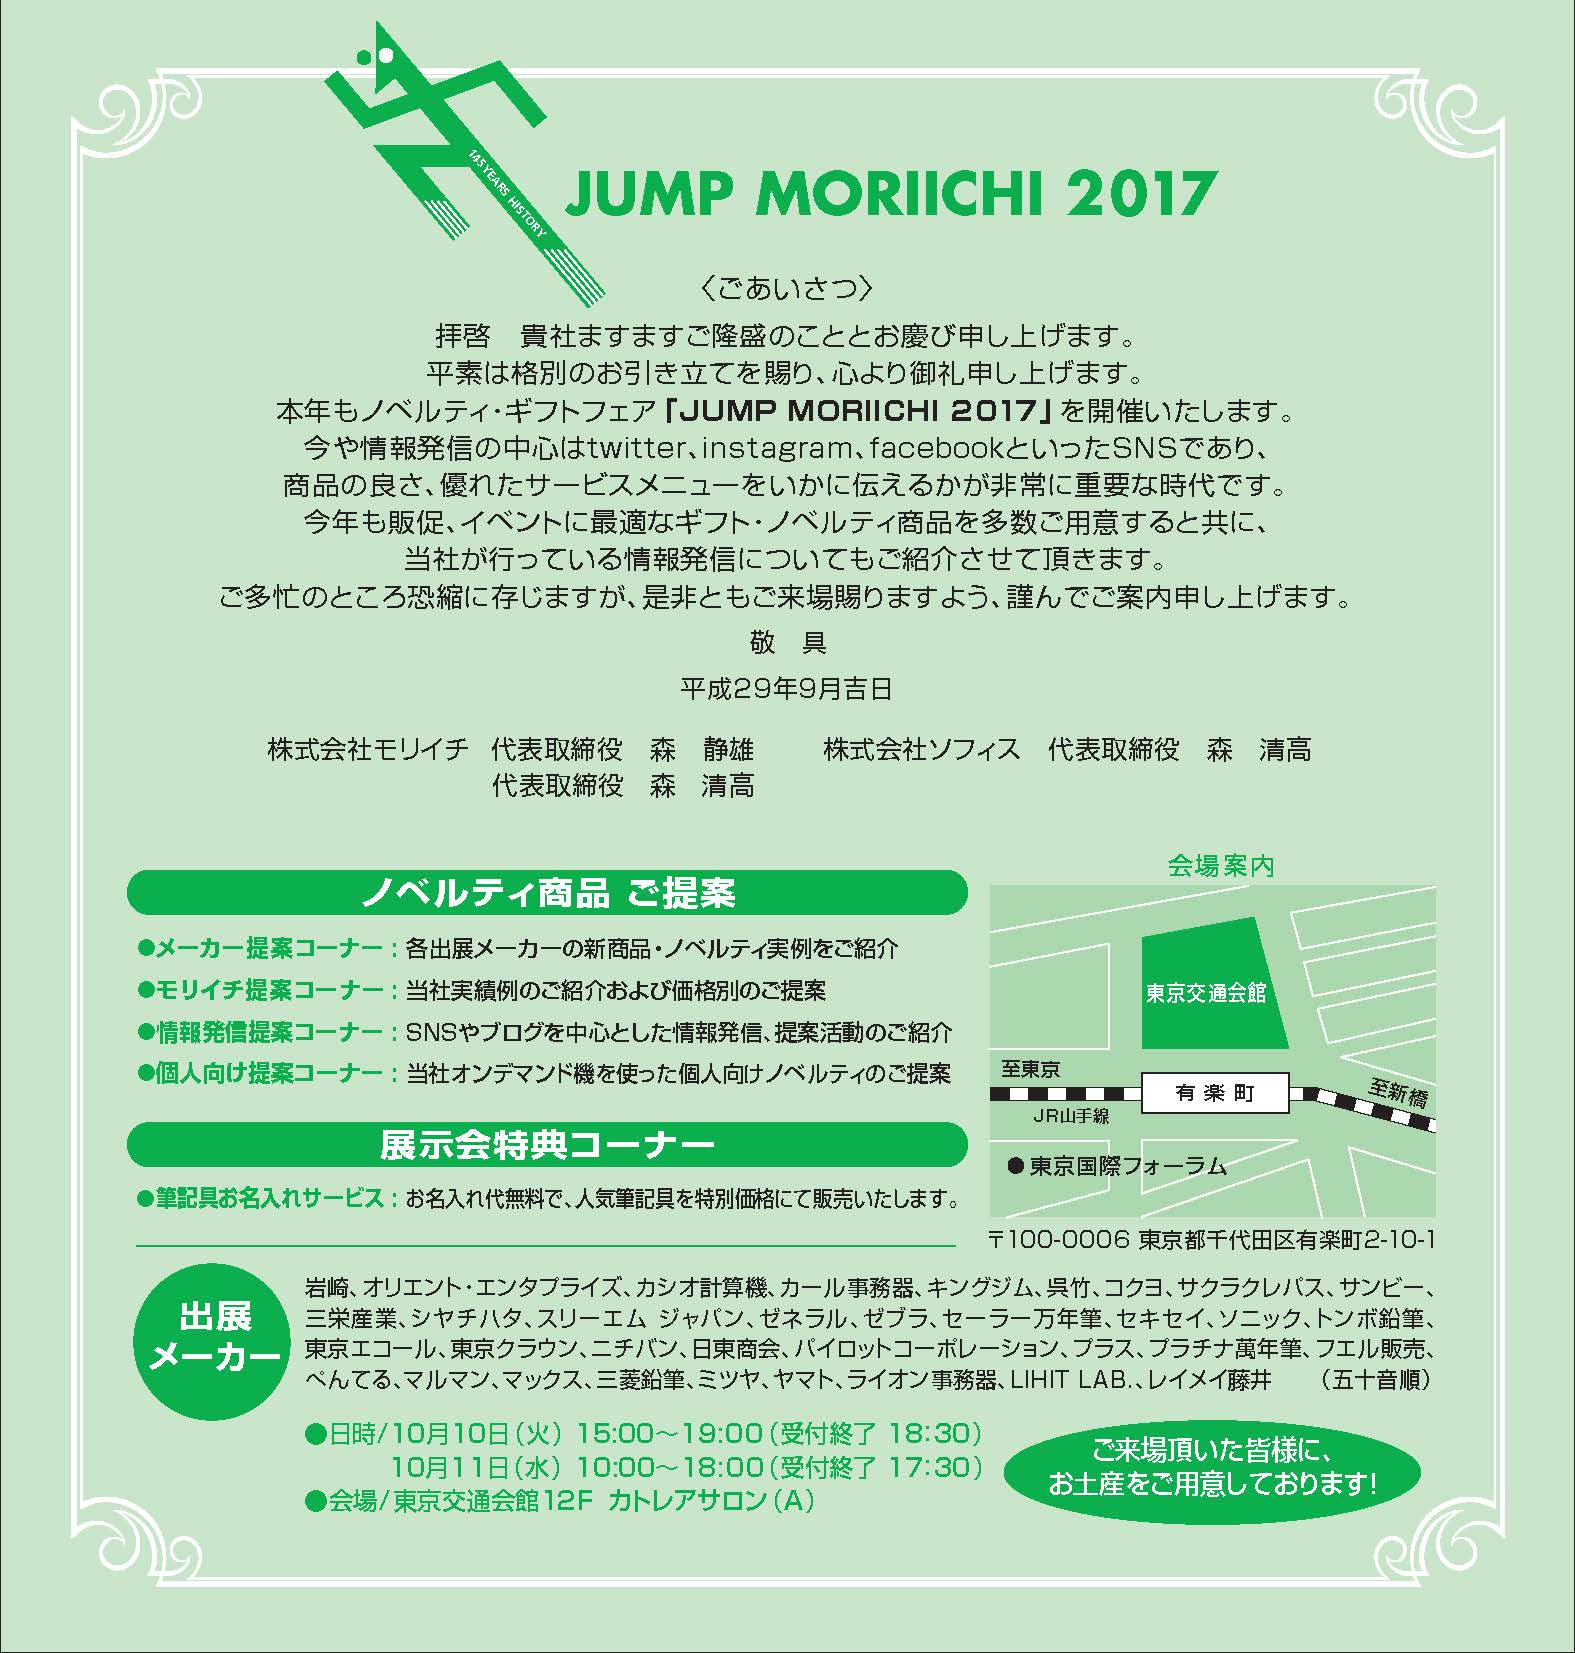 JUMP MORIICHI 2017